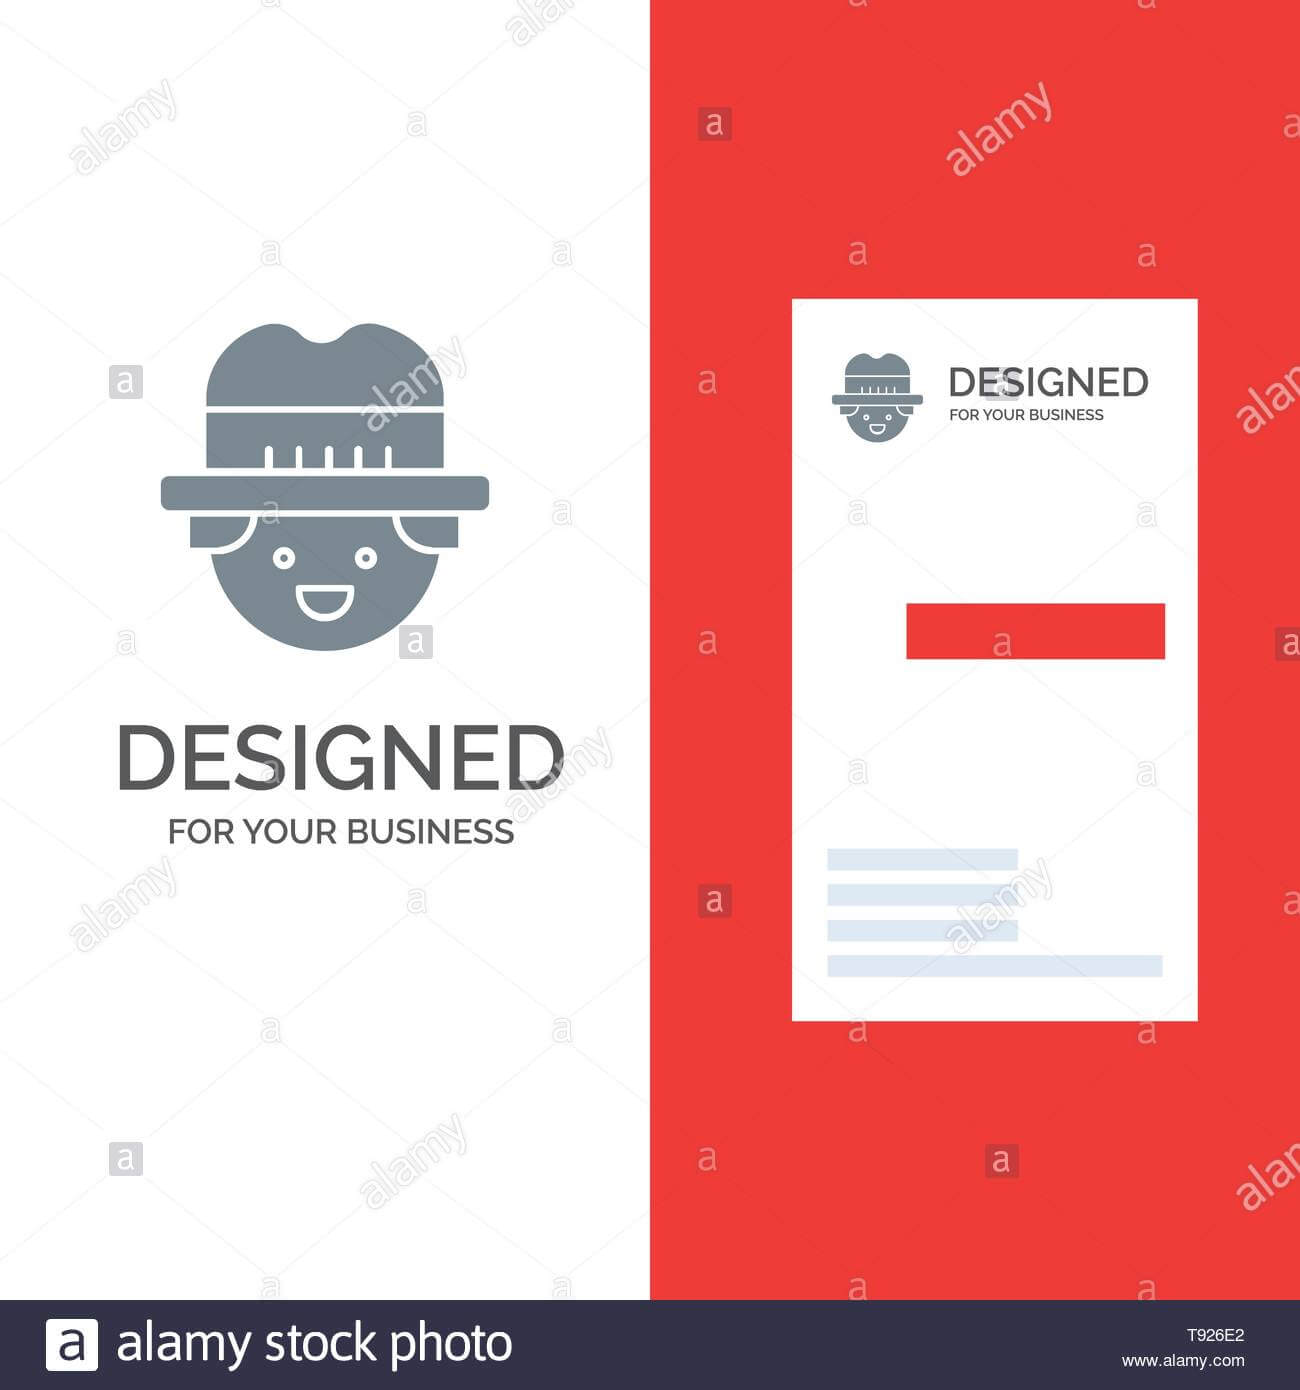 Bauern, Gärtner, Mann Grau Logo Design Und Business Card With Gartner Business Cards Template